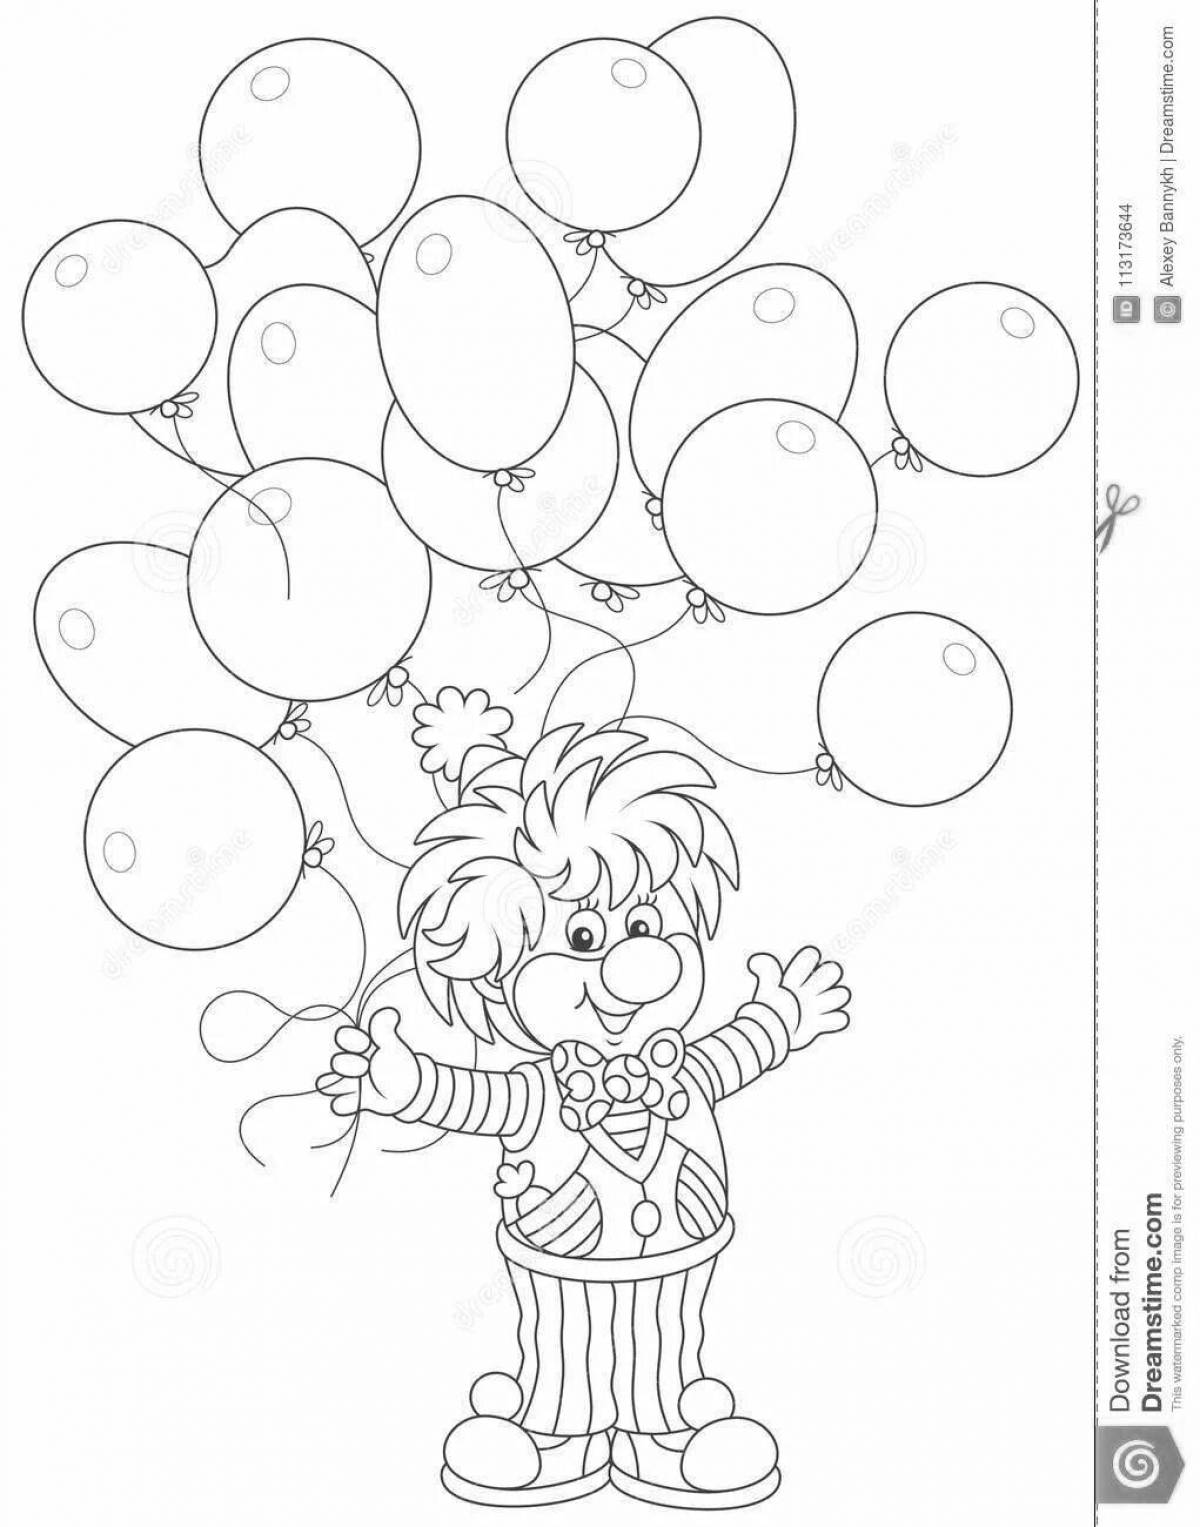 Glitter balloon clown